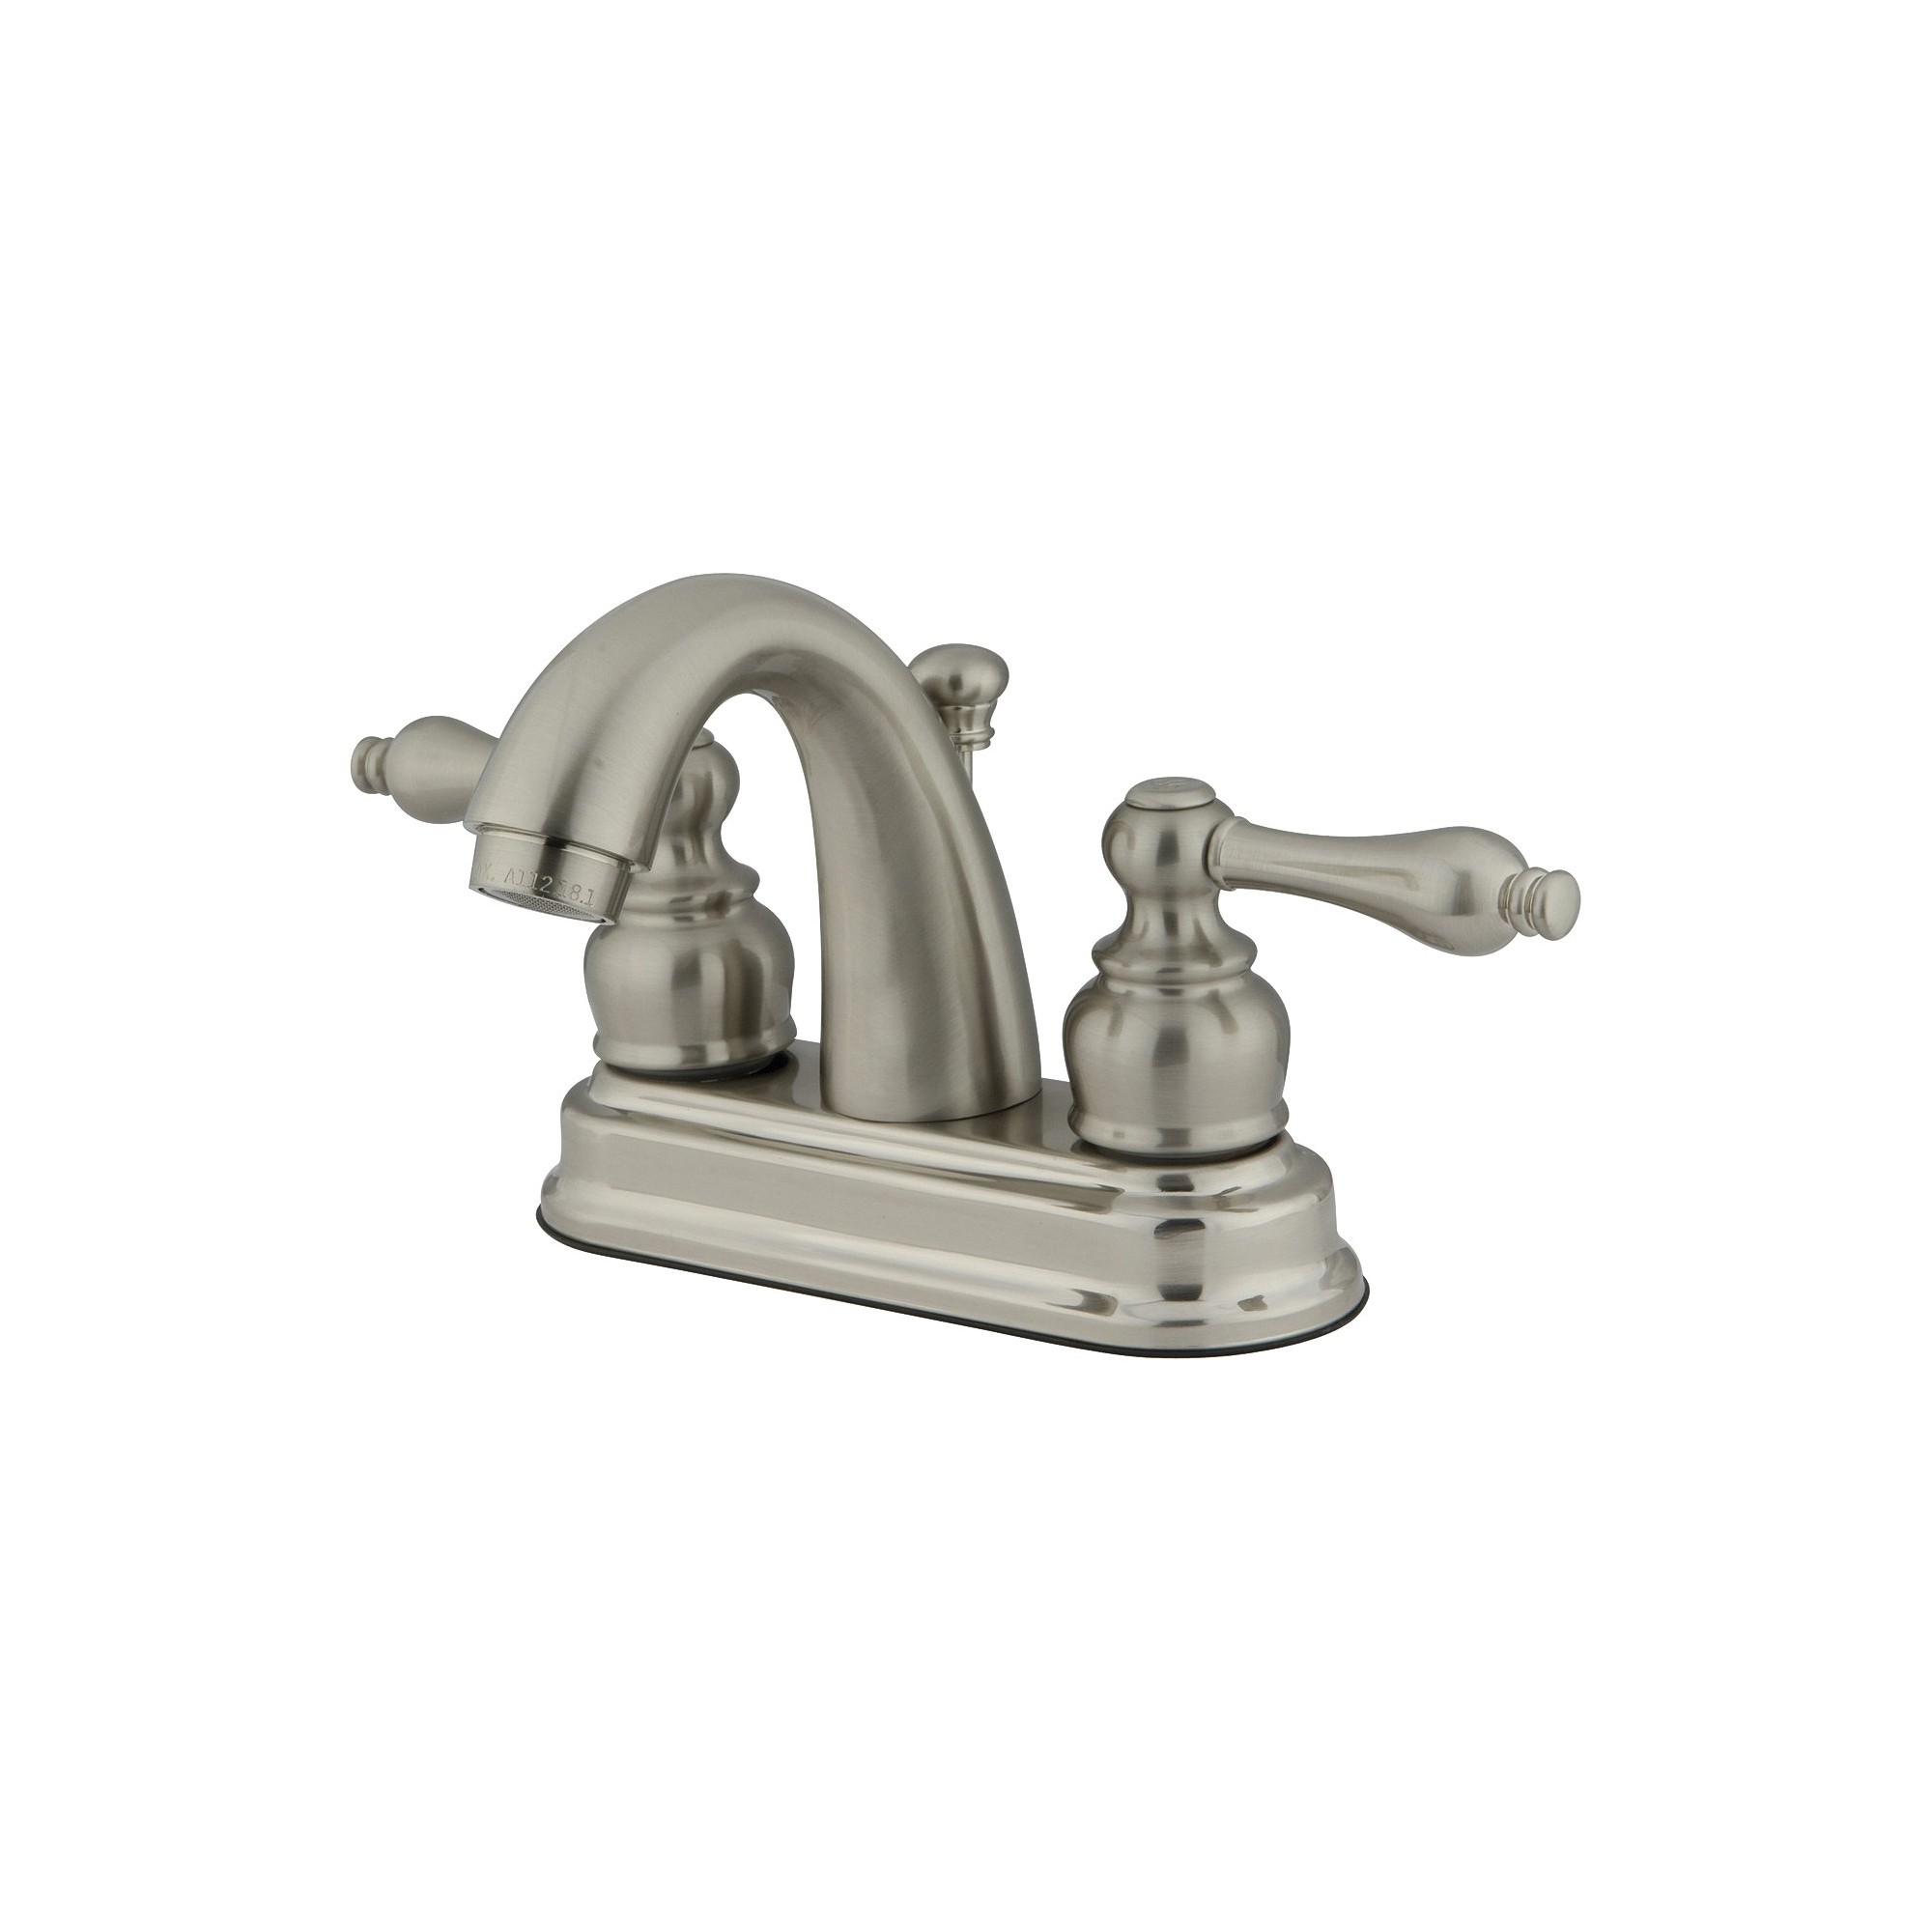 Restoration Classic Bathroom Faucet Satin Nickel - Kingston Brass, Satin Nicle